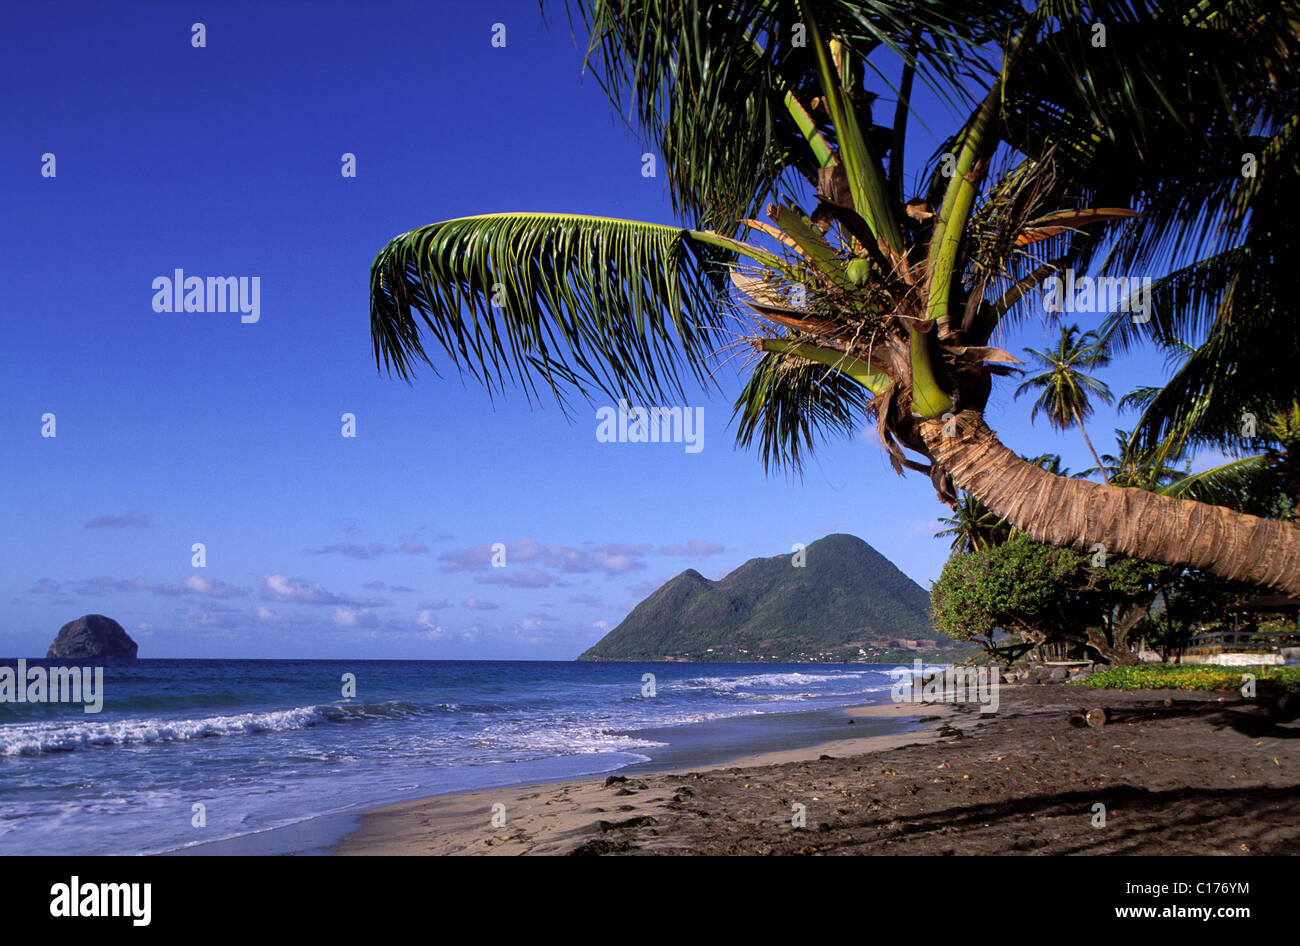 France, Martinique Island, Diamond beach Stock Photo